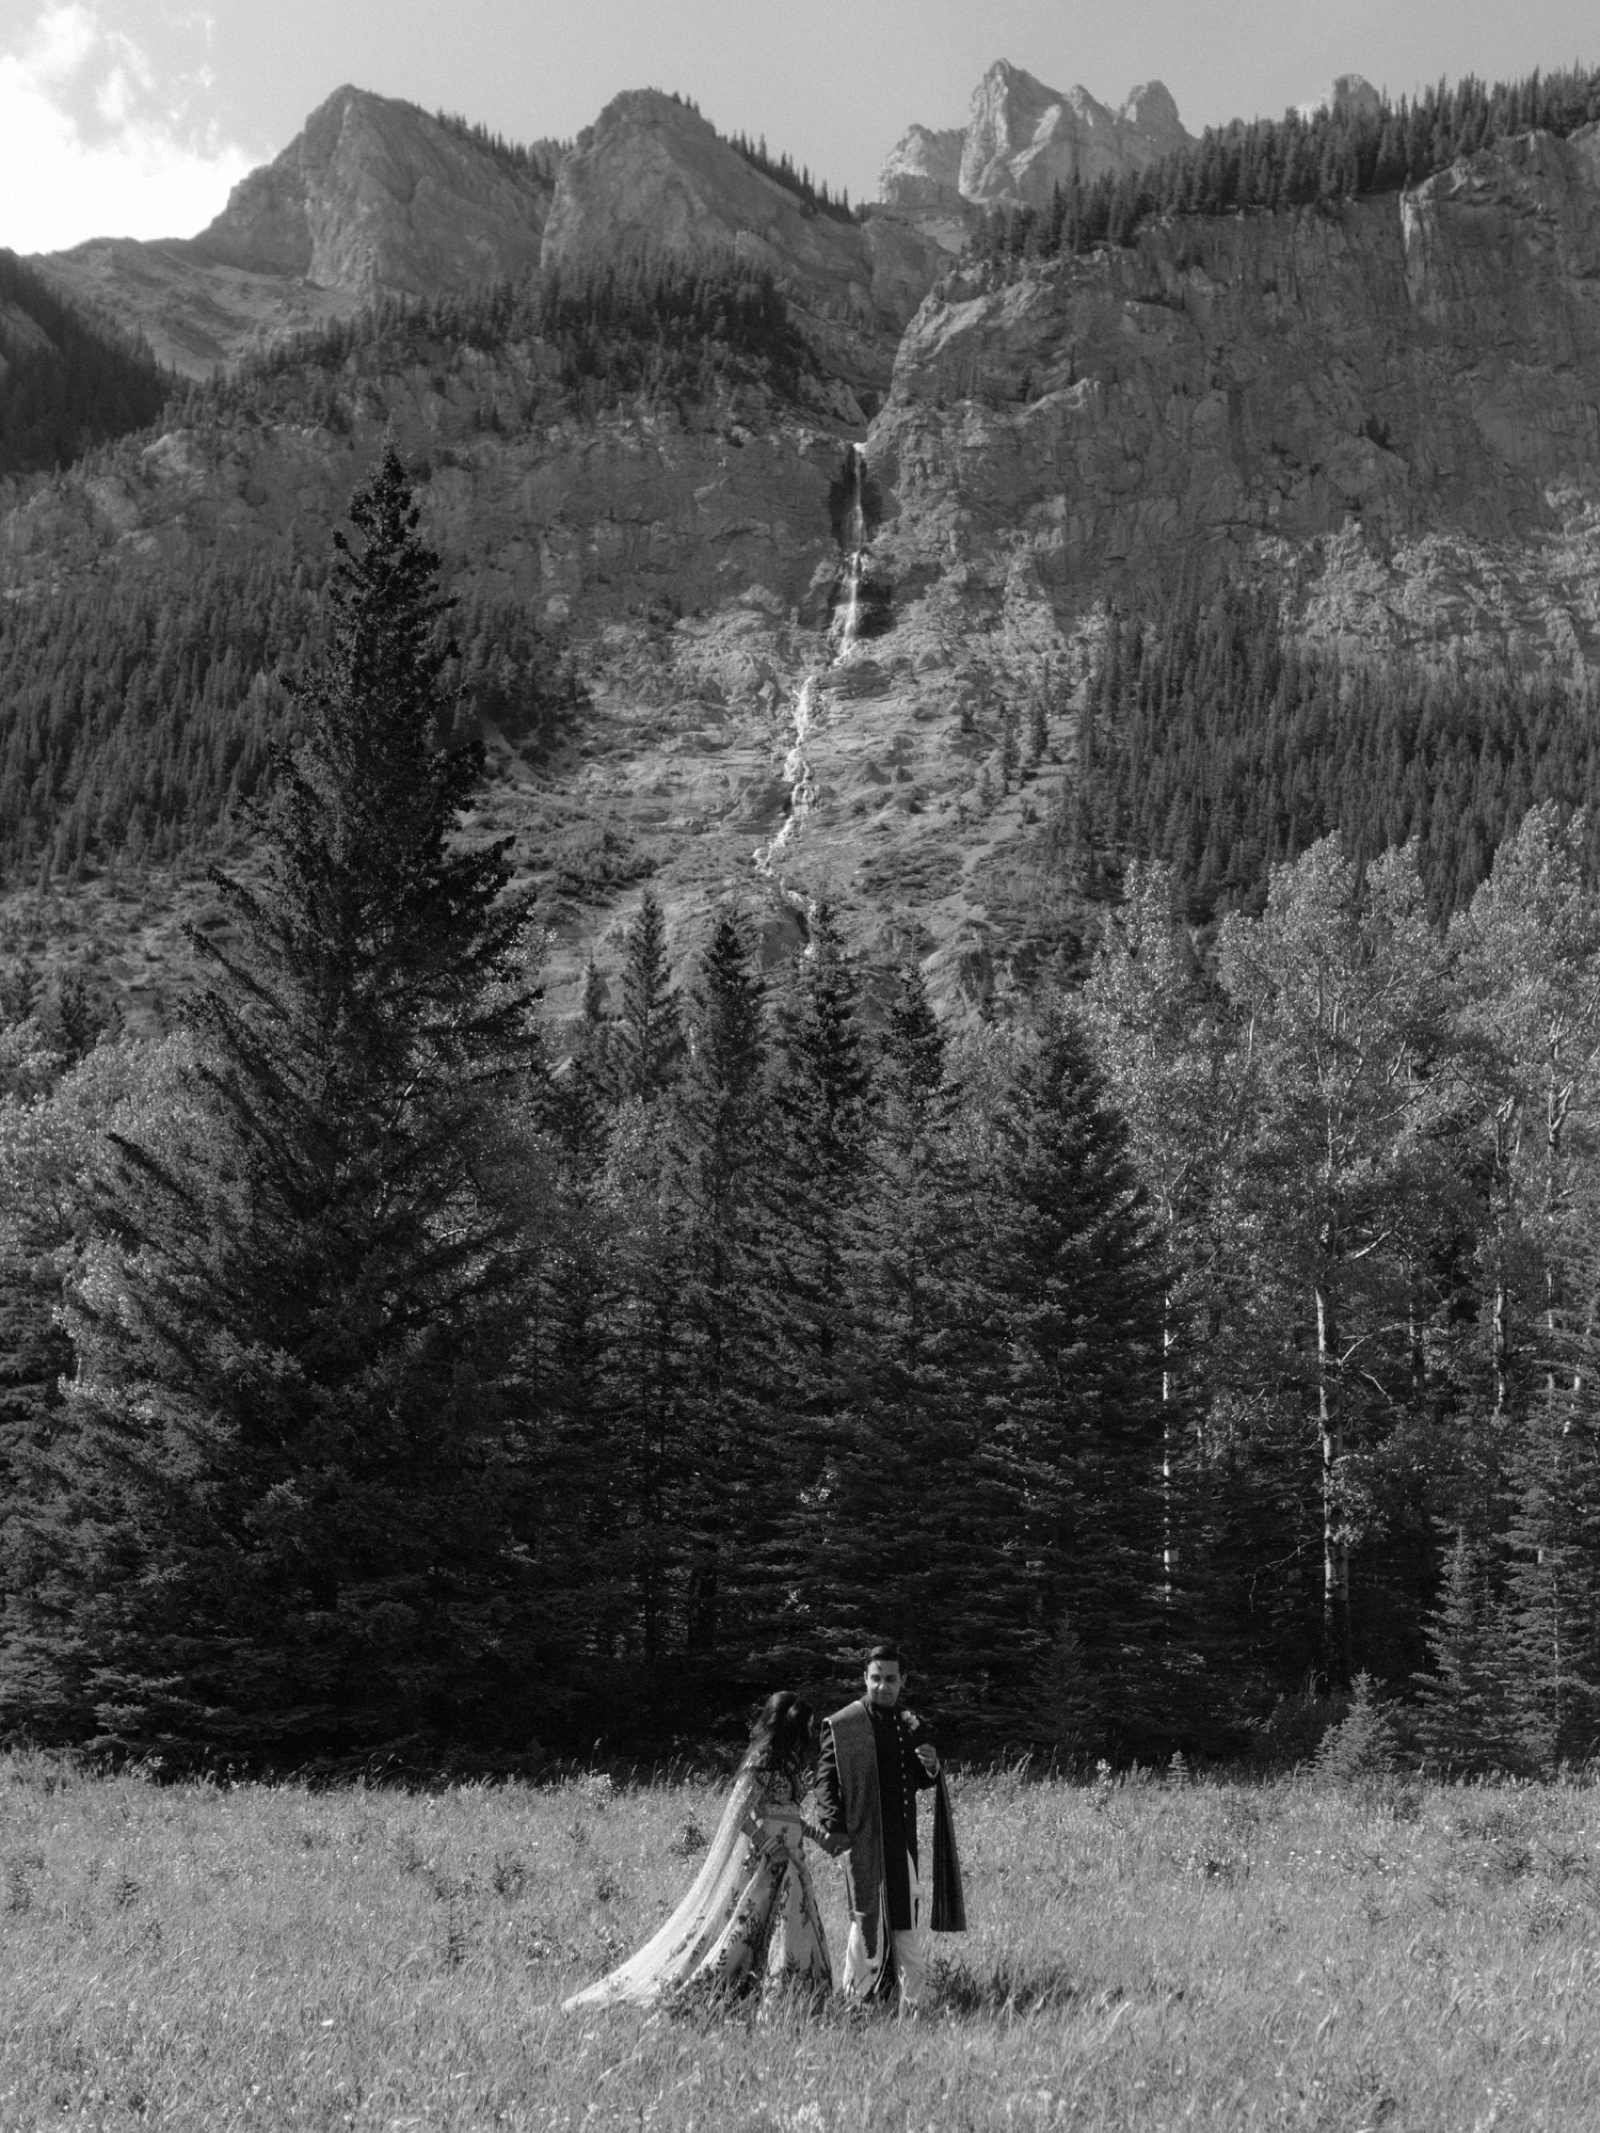 Cascade mountain waterfalls as a unique wedding portrait backdrop behind a couple walks through the buffalo paddocks